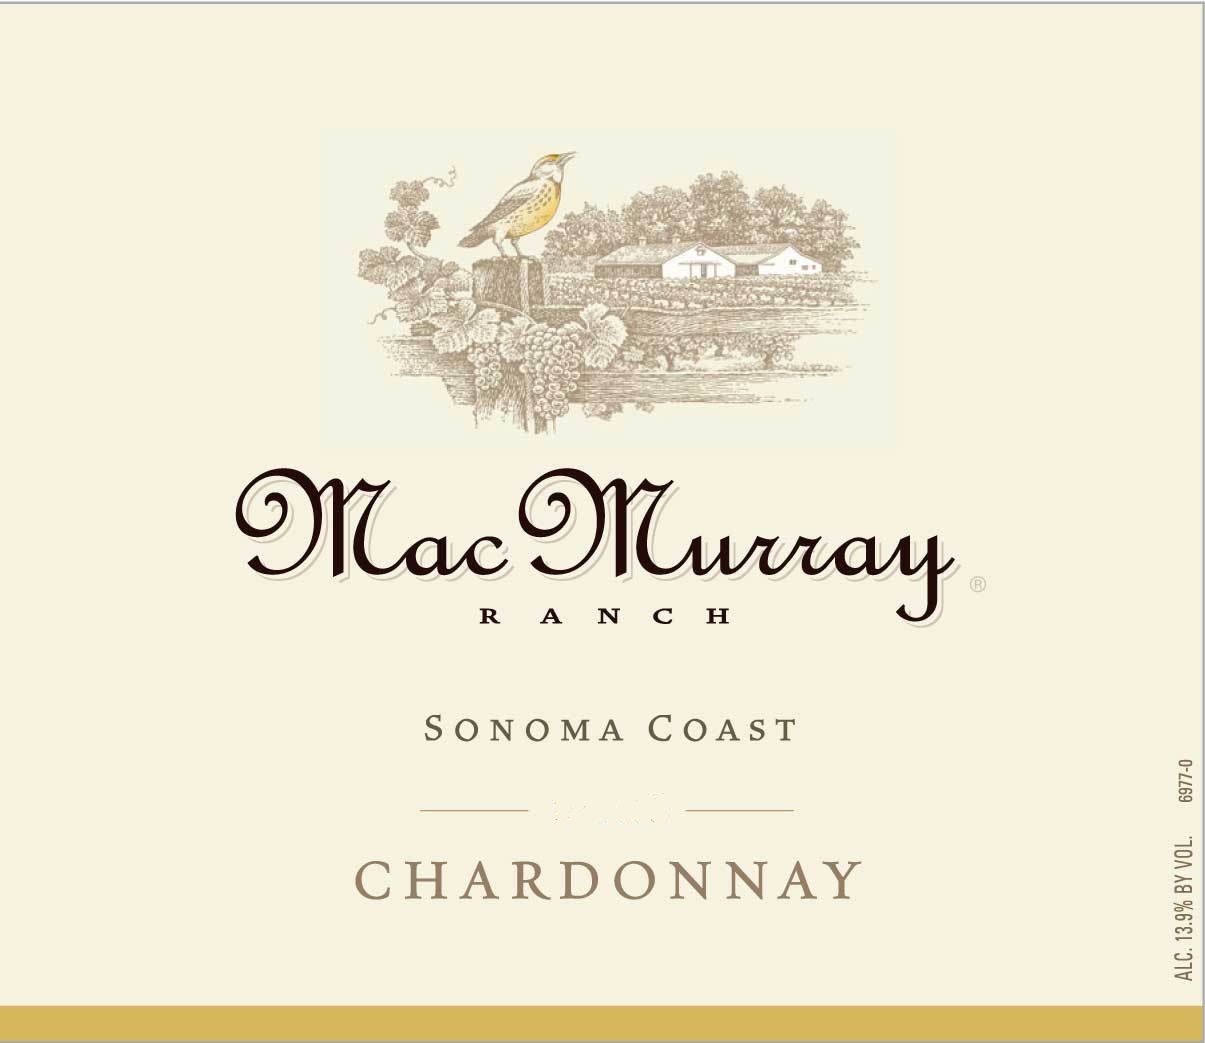 2012 MacMurray Ranch Russian River Chardonnay - click image for full description